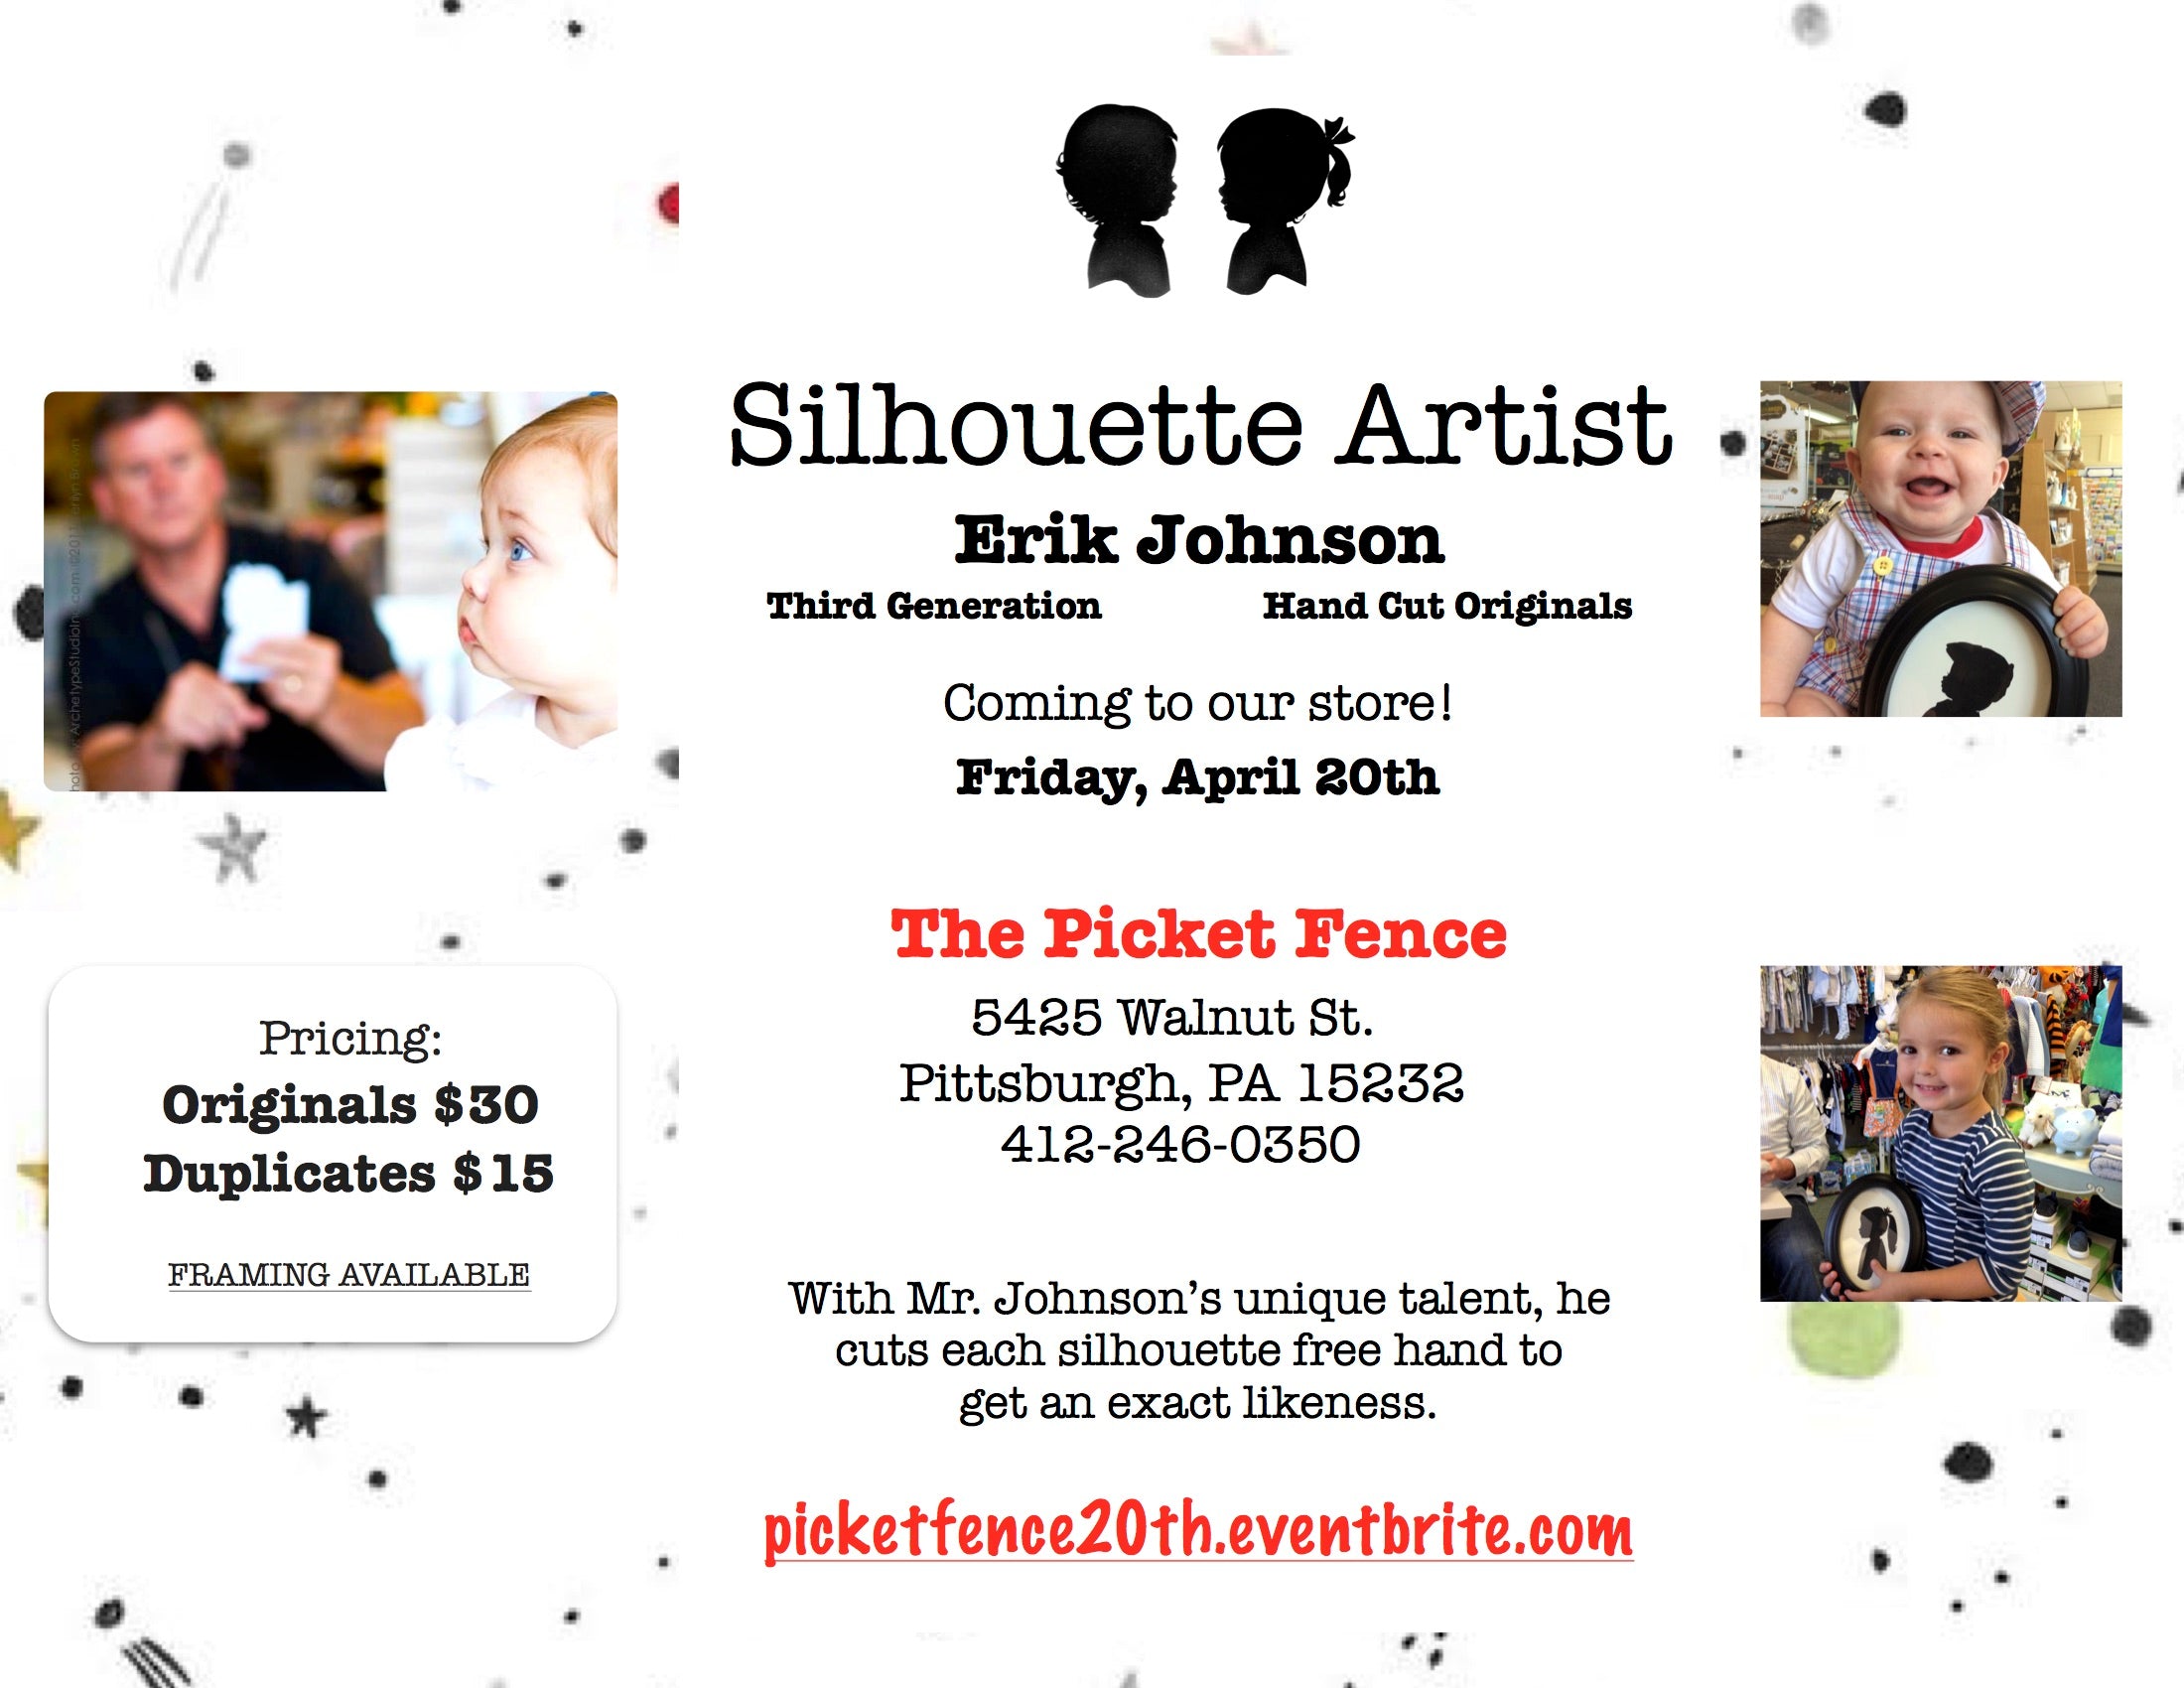 Silhouette Artist Erik Johnson, April 20th